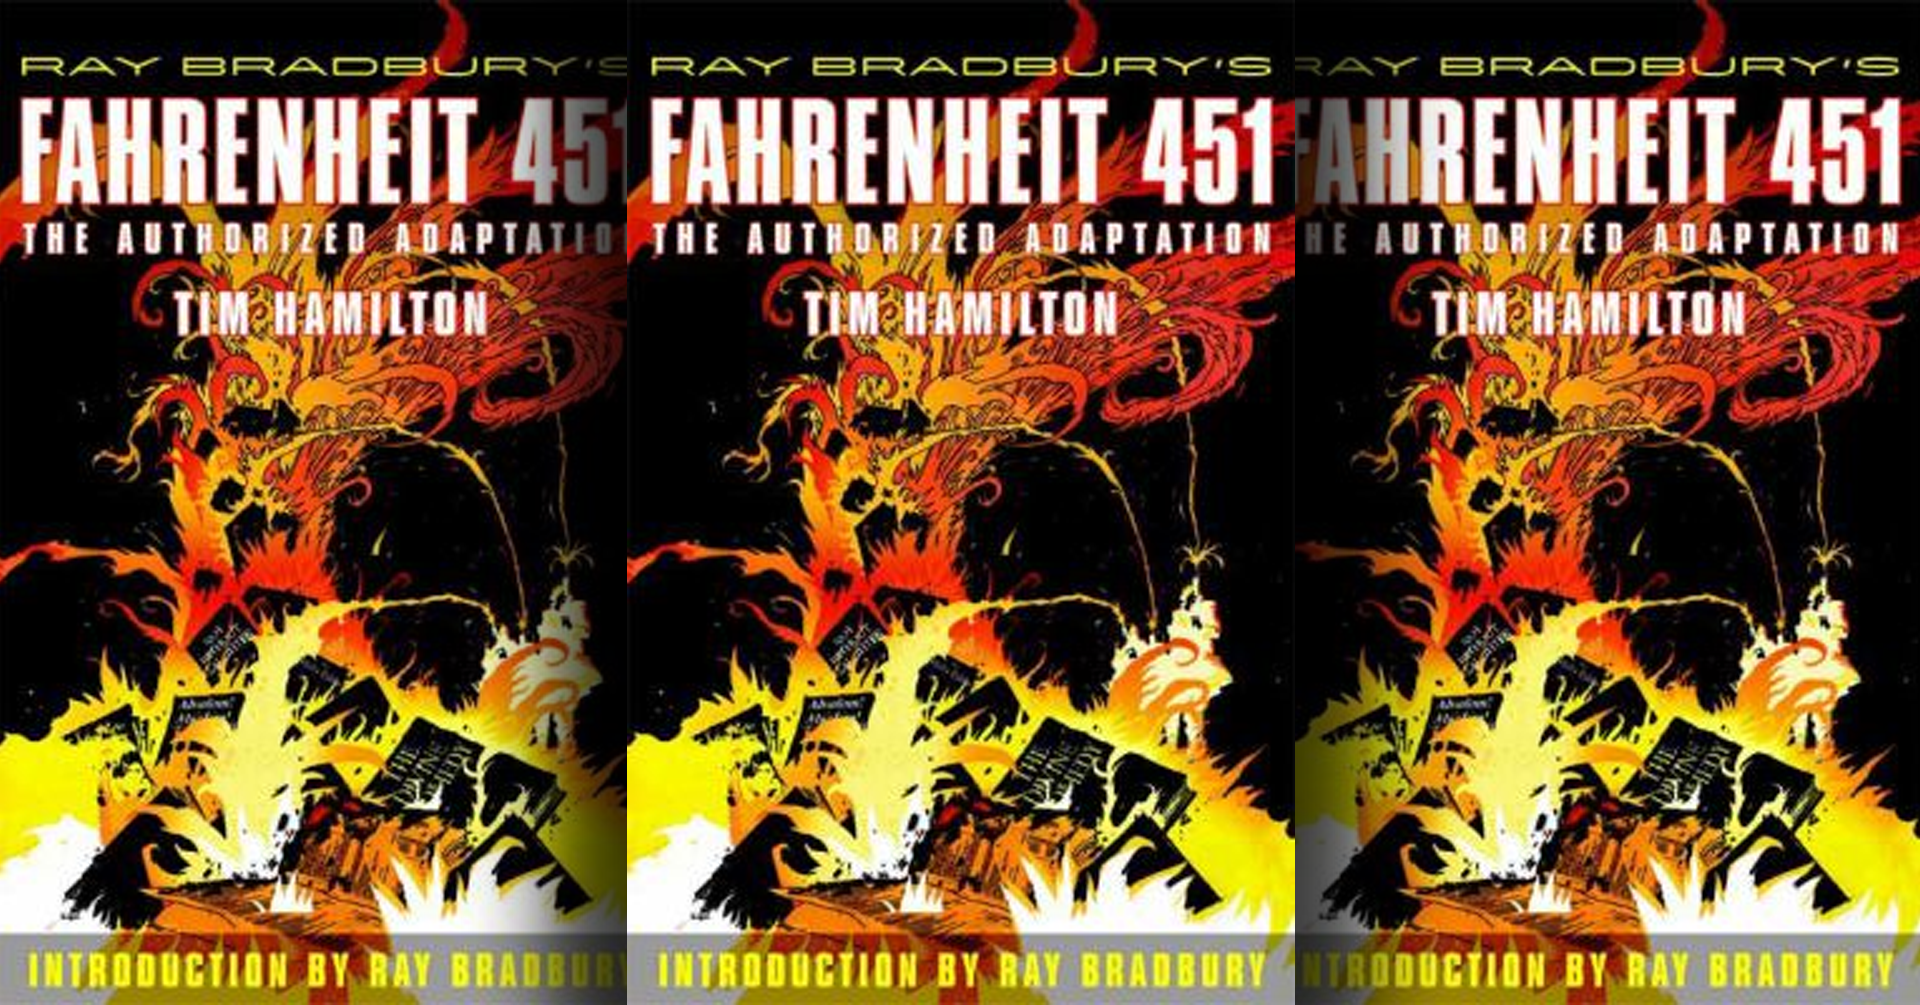 Fahrenheit 451 by Ray Bradbury (book cover)